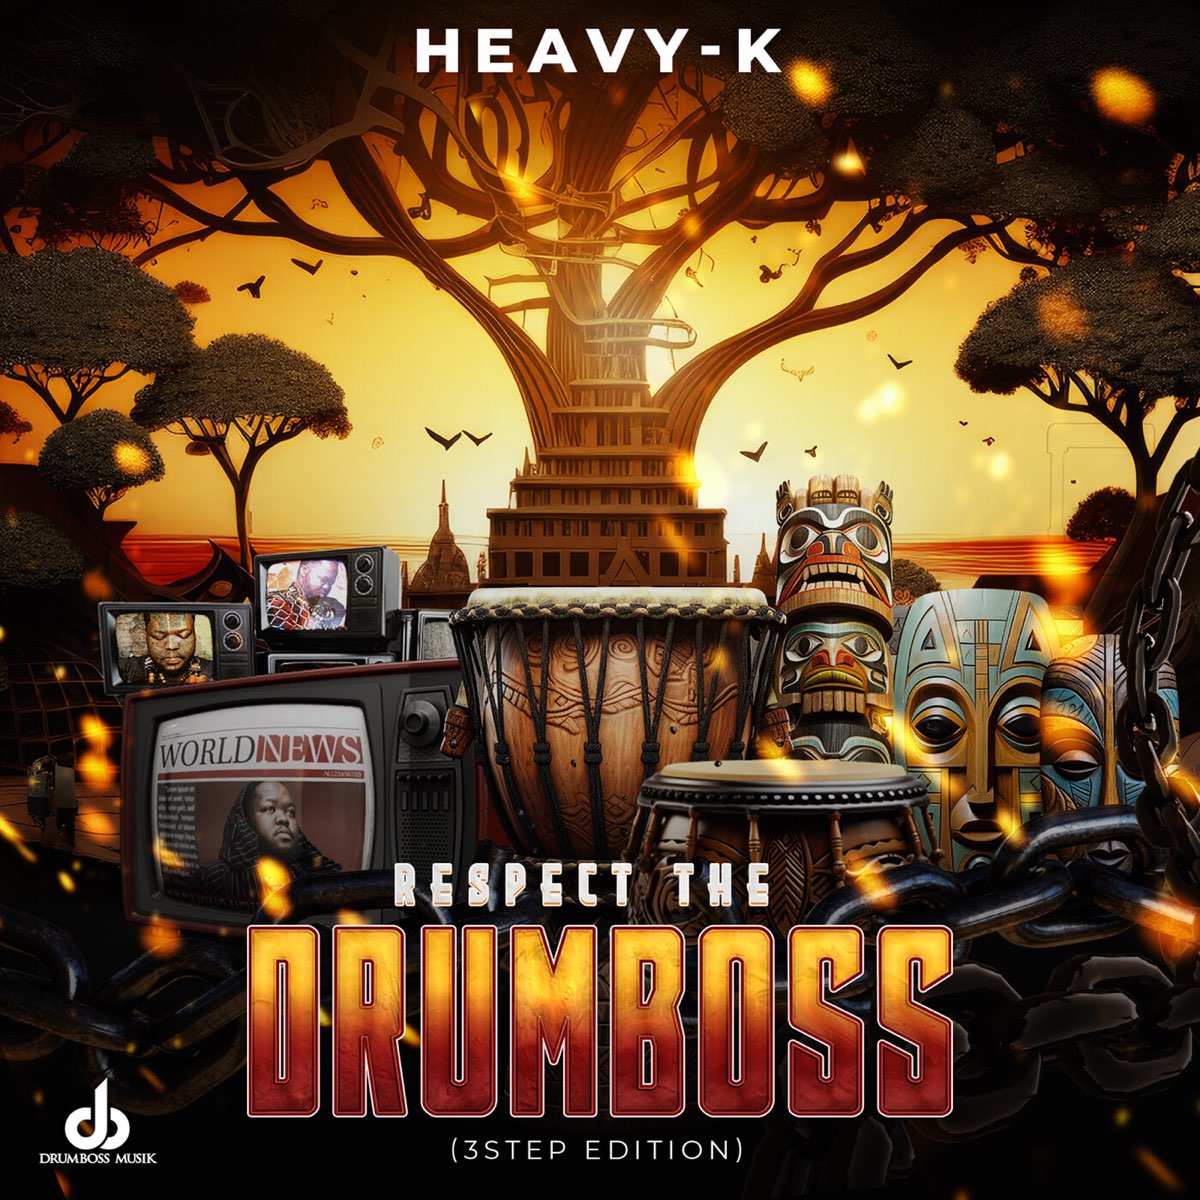 Heavy K – Respect The Drumboss (3 Step Edition) Album 17